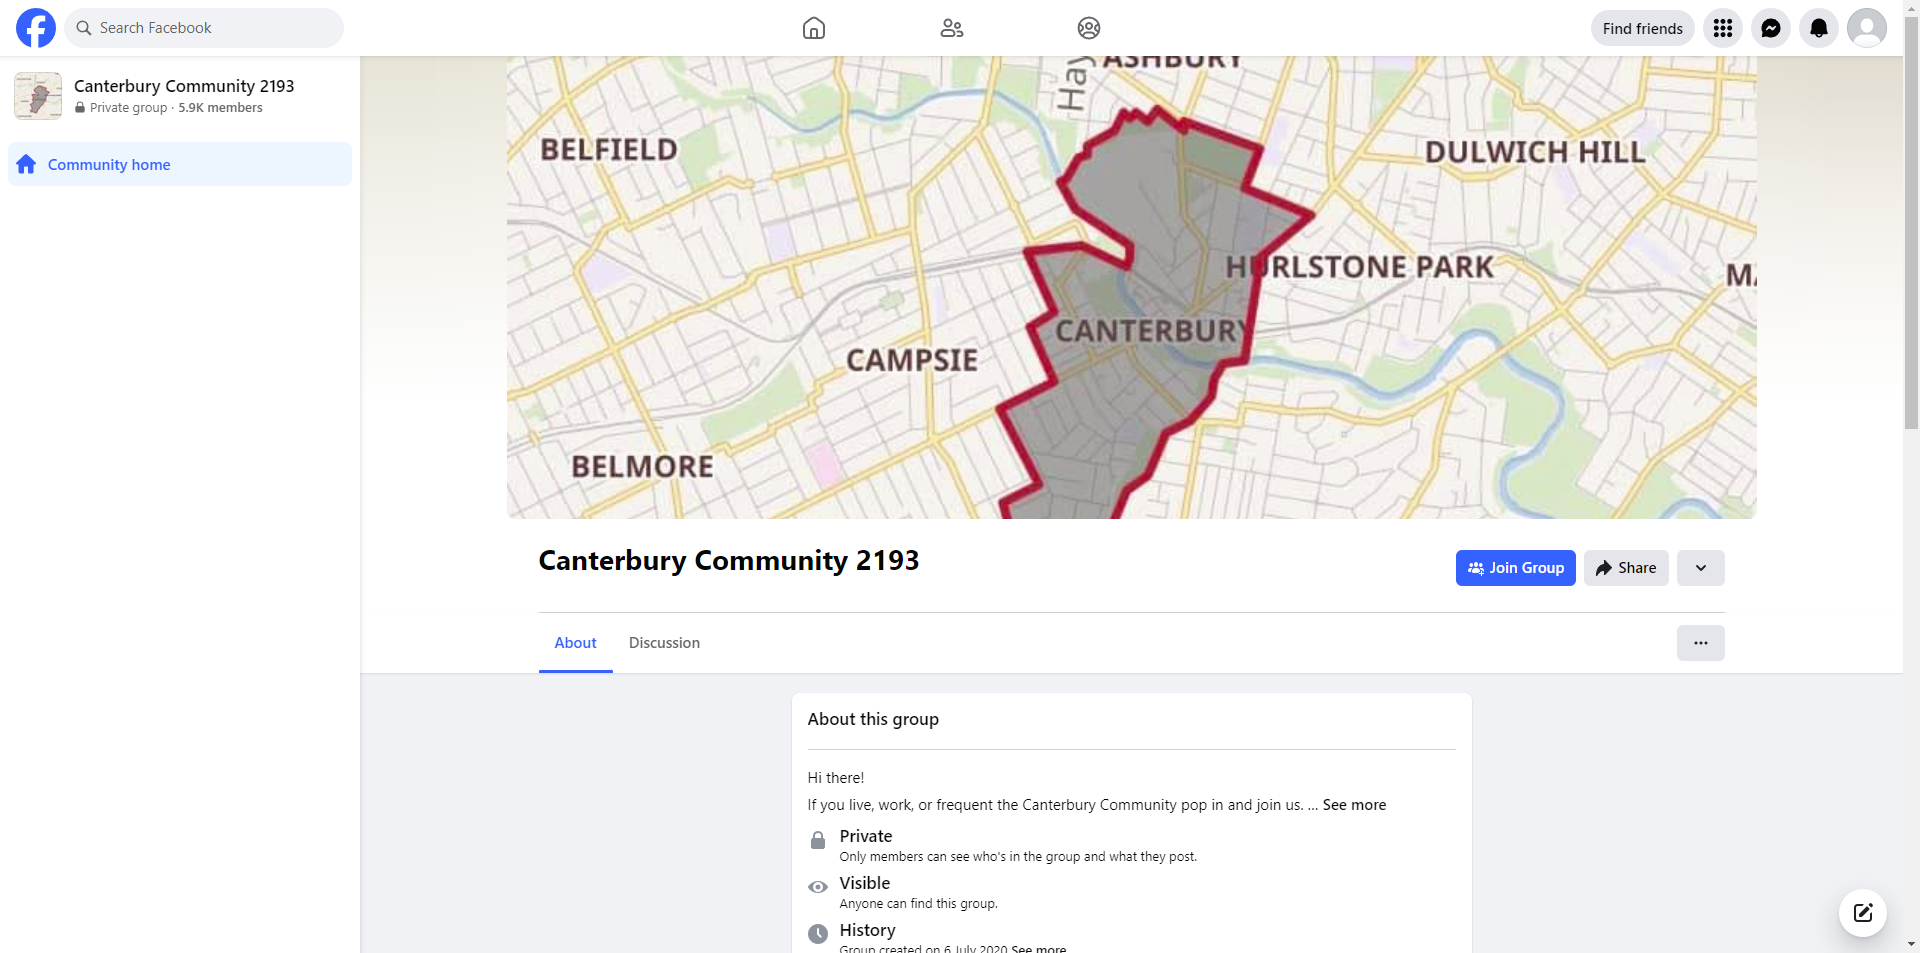 Canterbury Community 2193